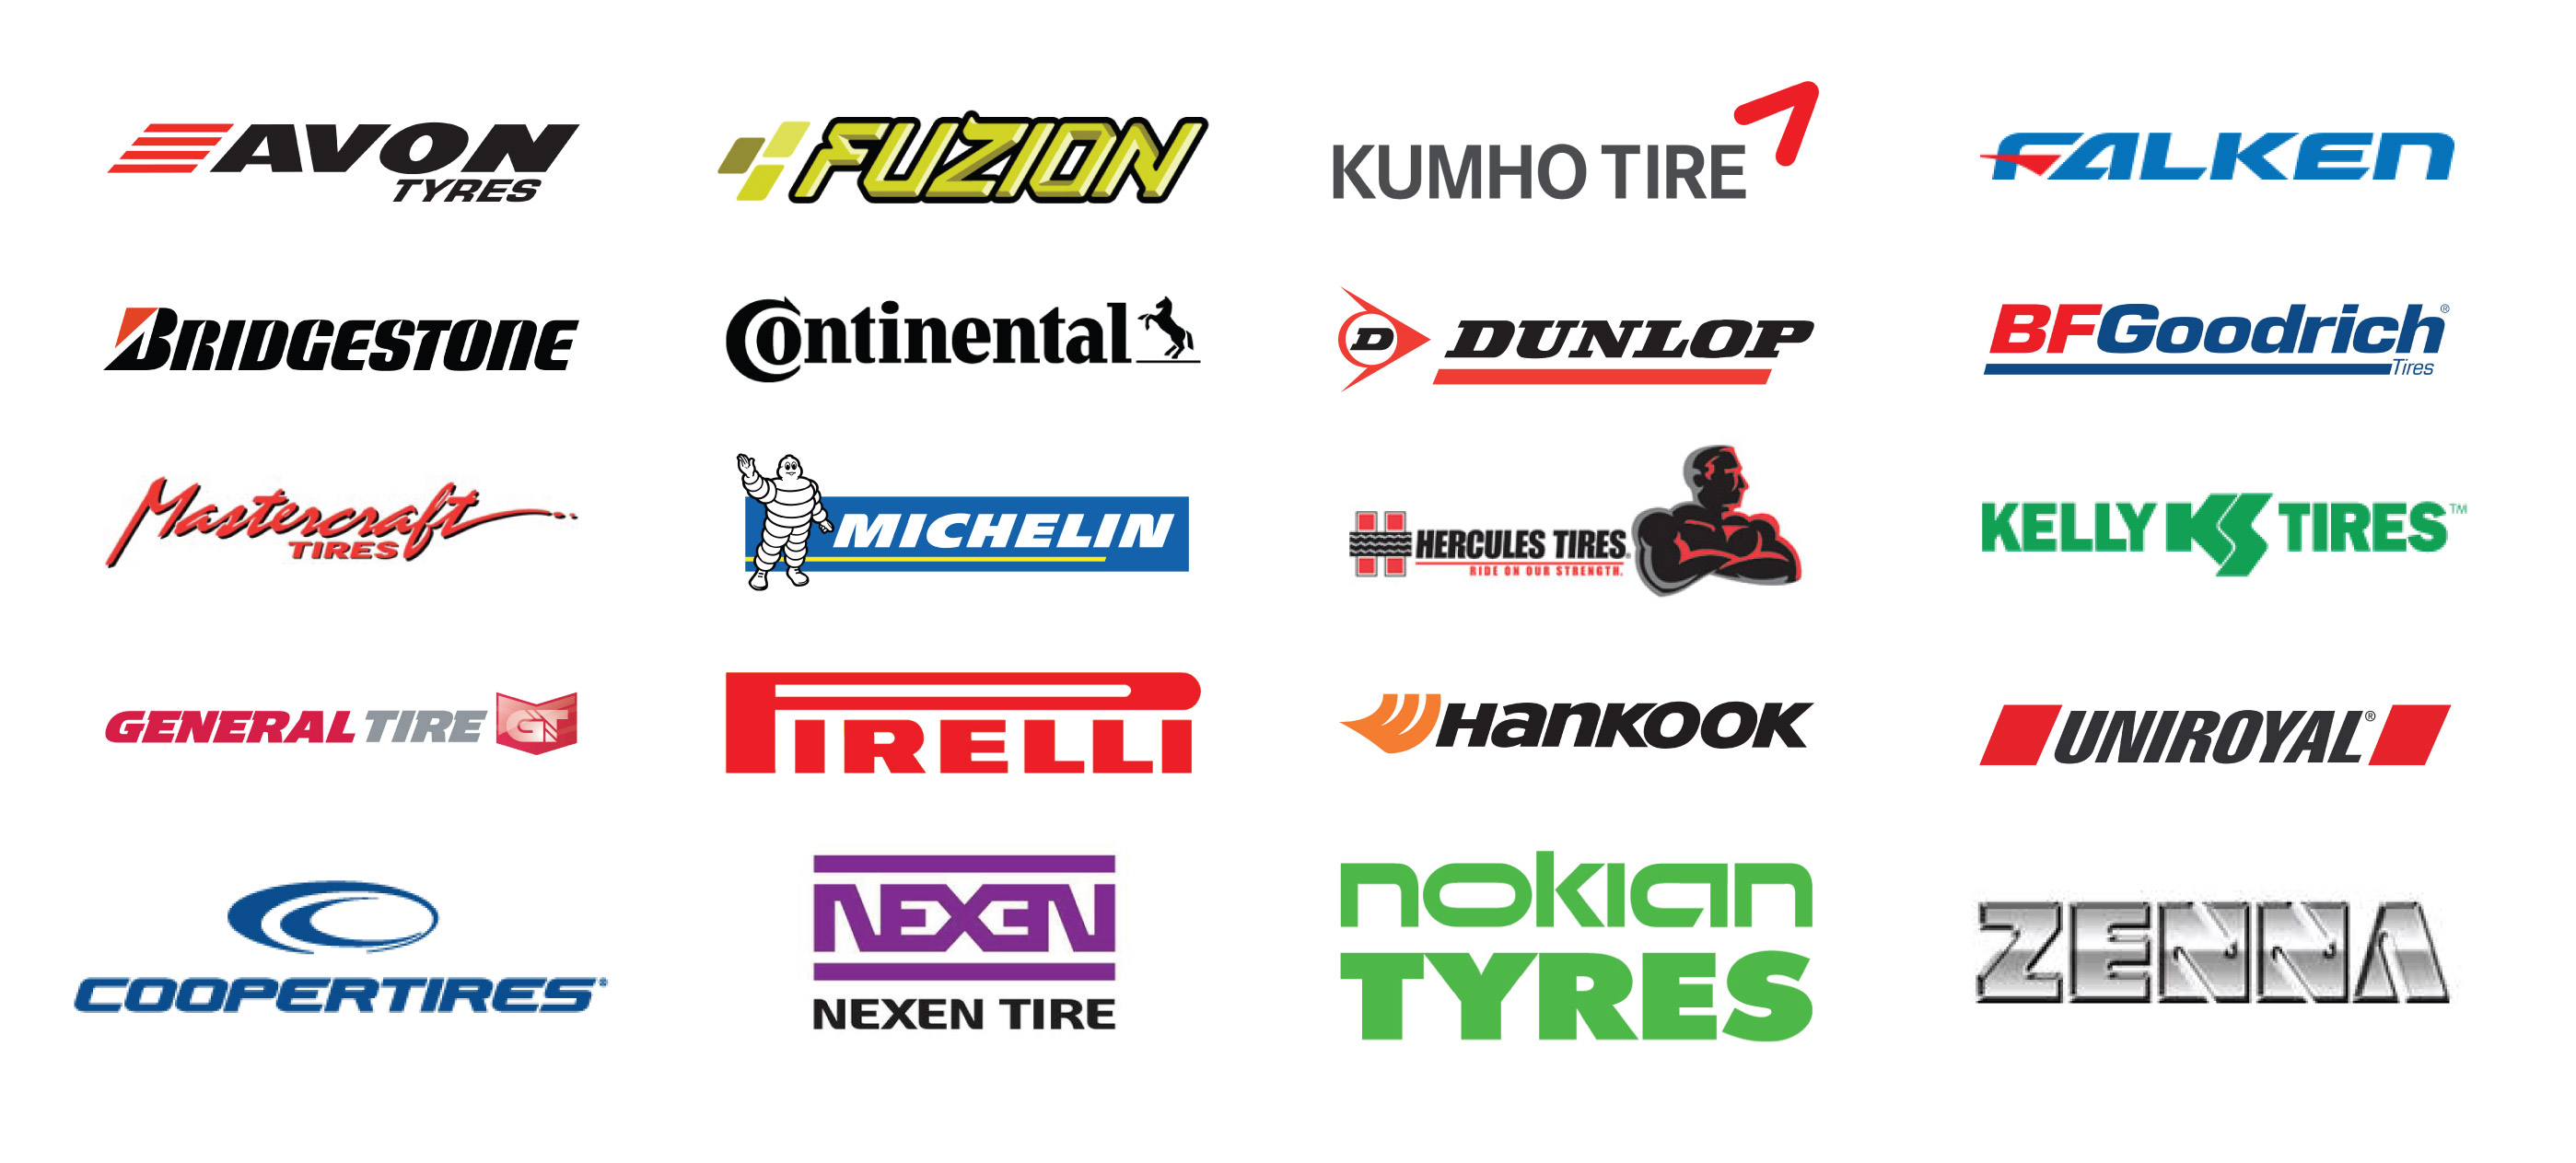 Tire brand logos